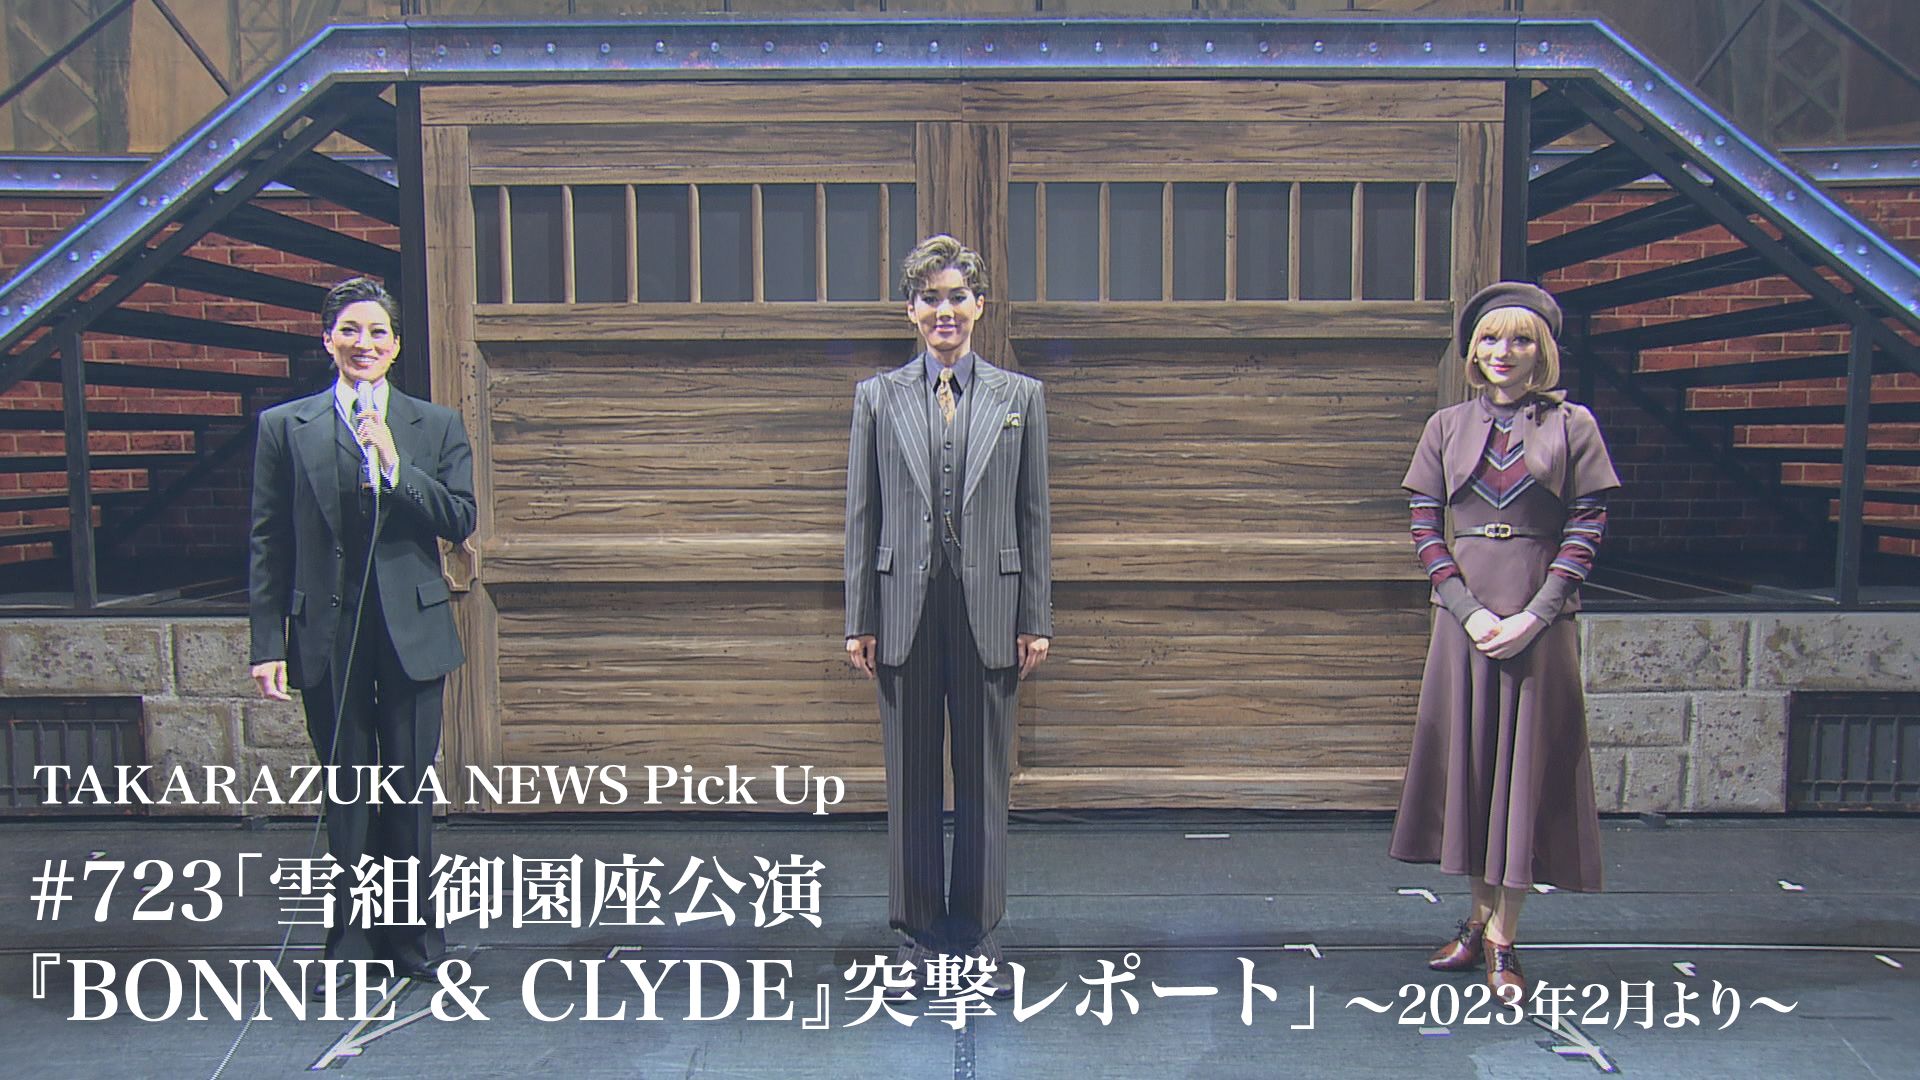 TAKARAZUKA NEWS Pick Up #723「雪組御園座公演『BONNIE & CLYDE』突撃レポート」〜2023年2月より〜